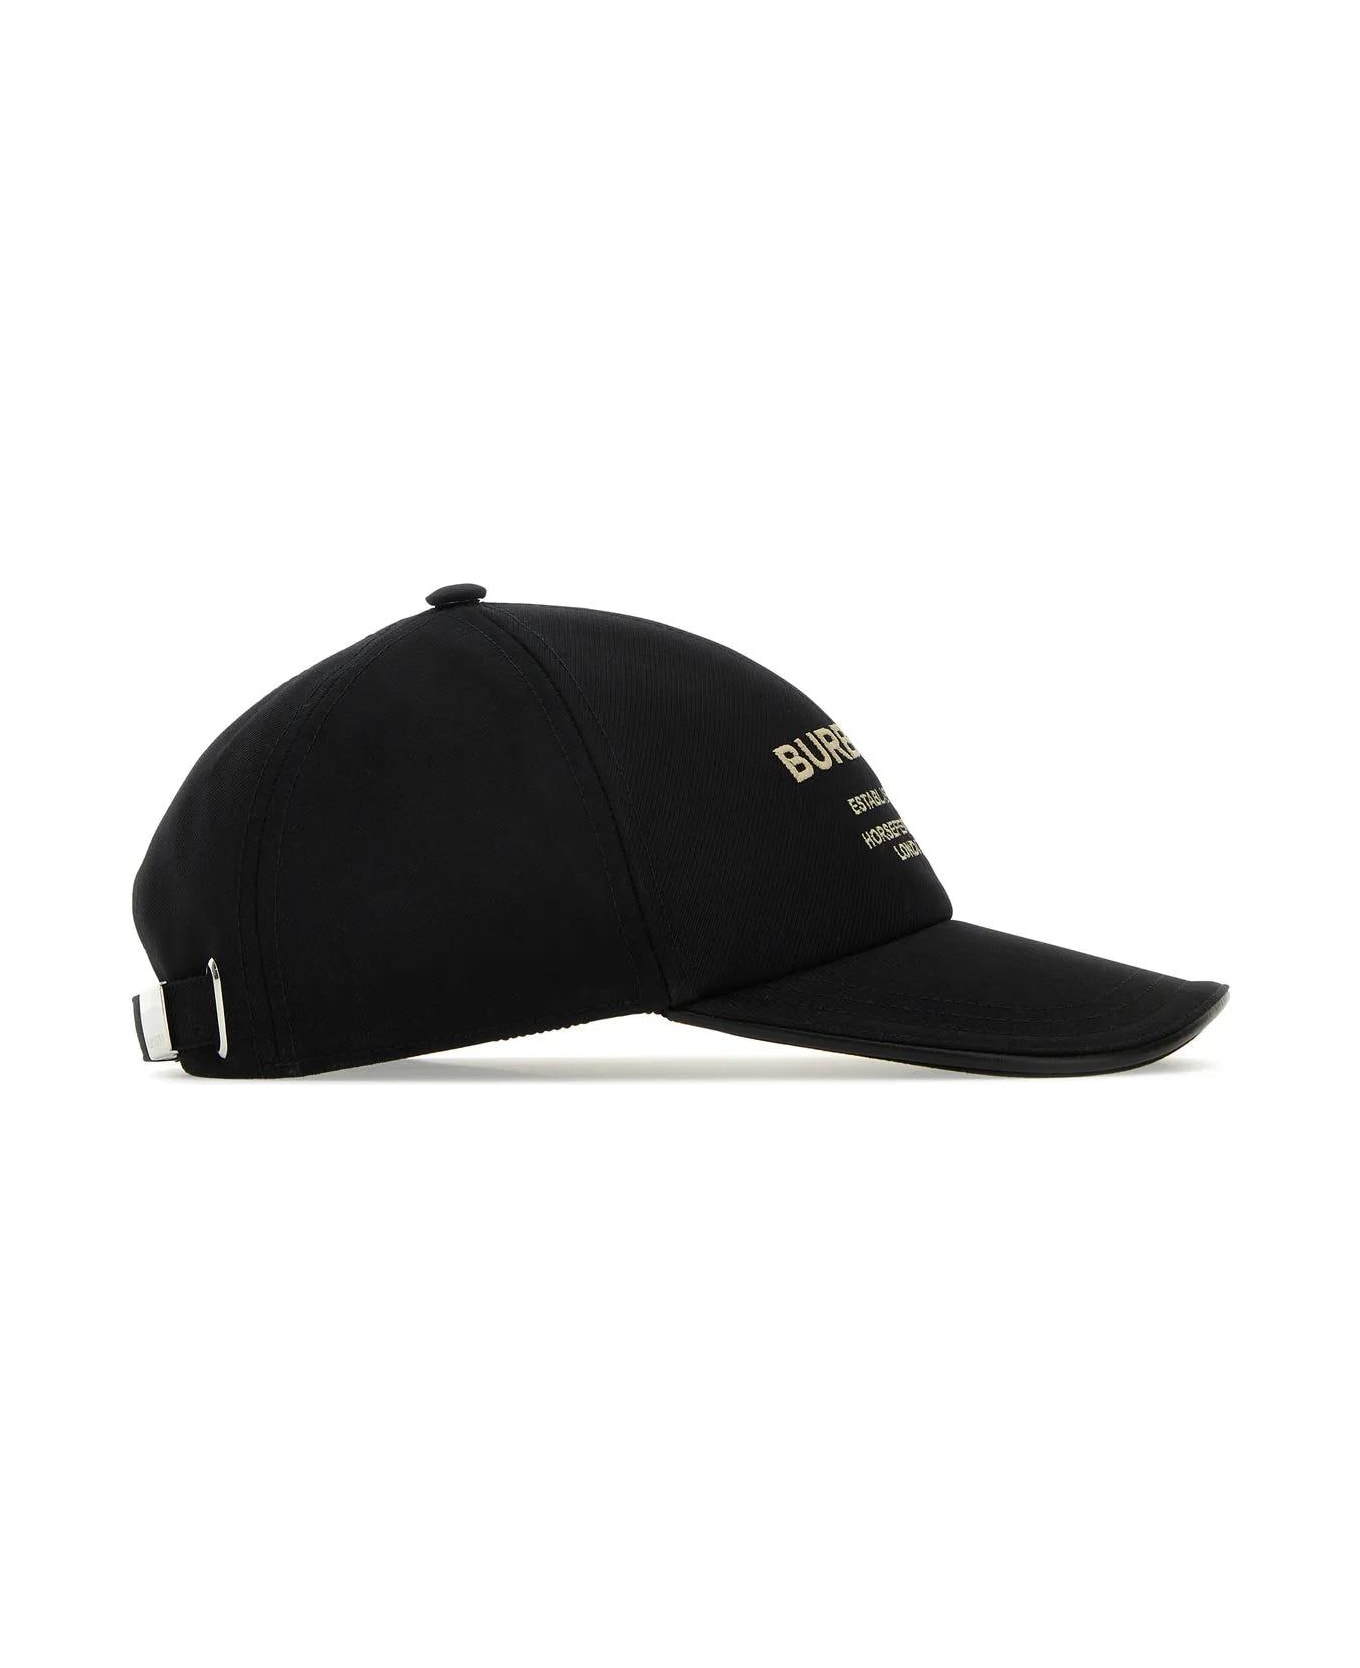 Burberry Black Cotton Baseball Cap - Black 帽子